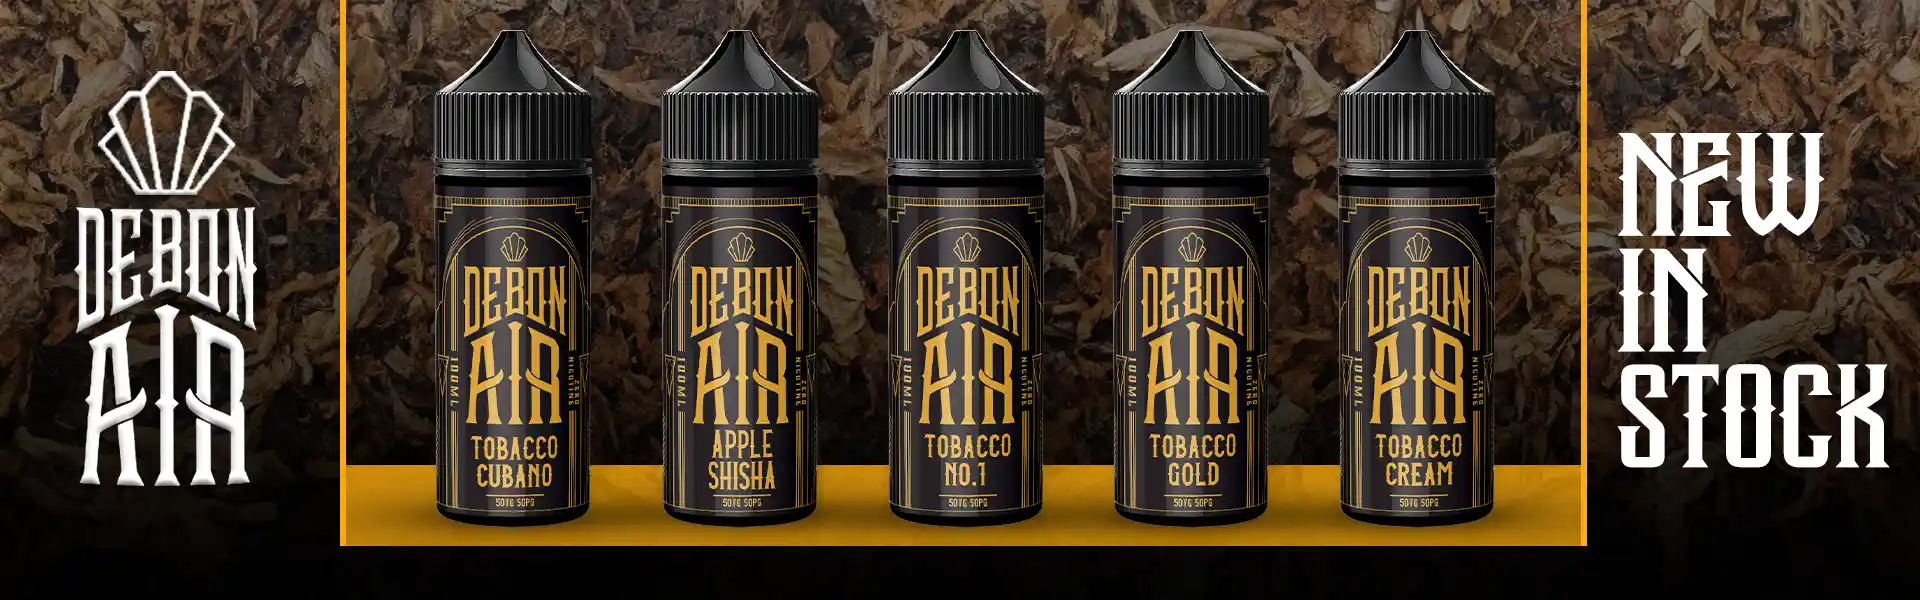 Debonair Tobacco now in stock